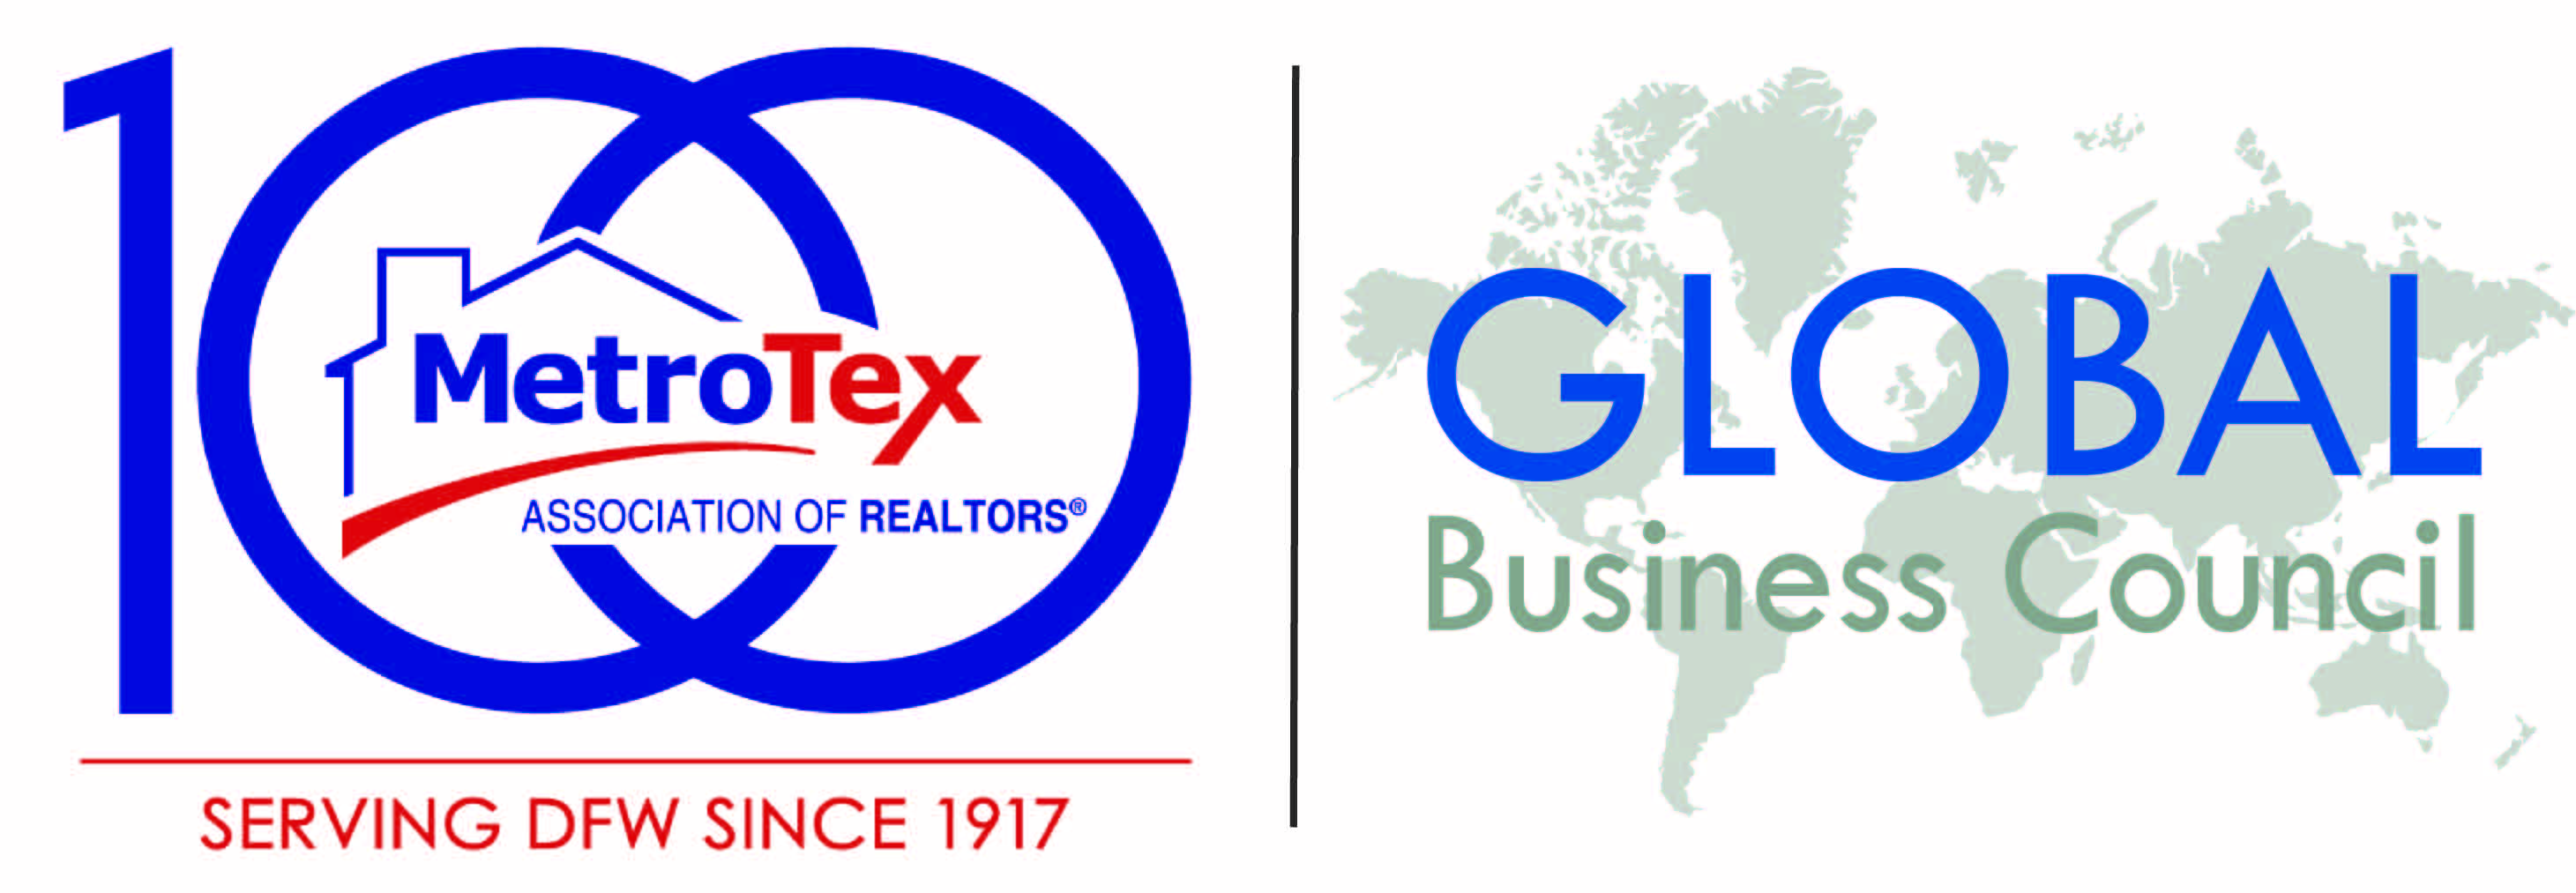 GBC Logo - MetroTex GBC Logo horizontal 100 | DFW Real Estate